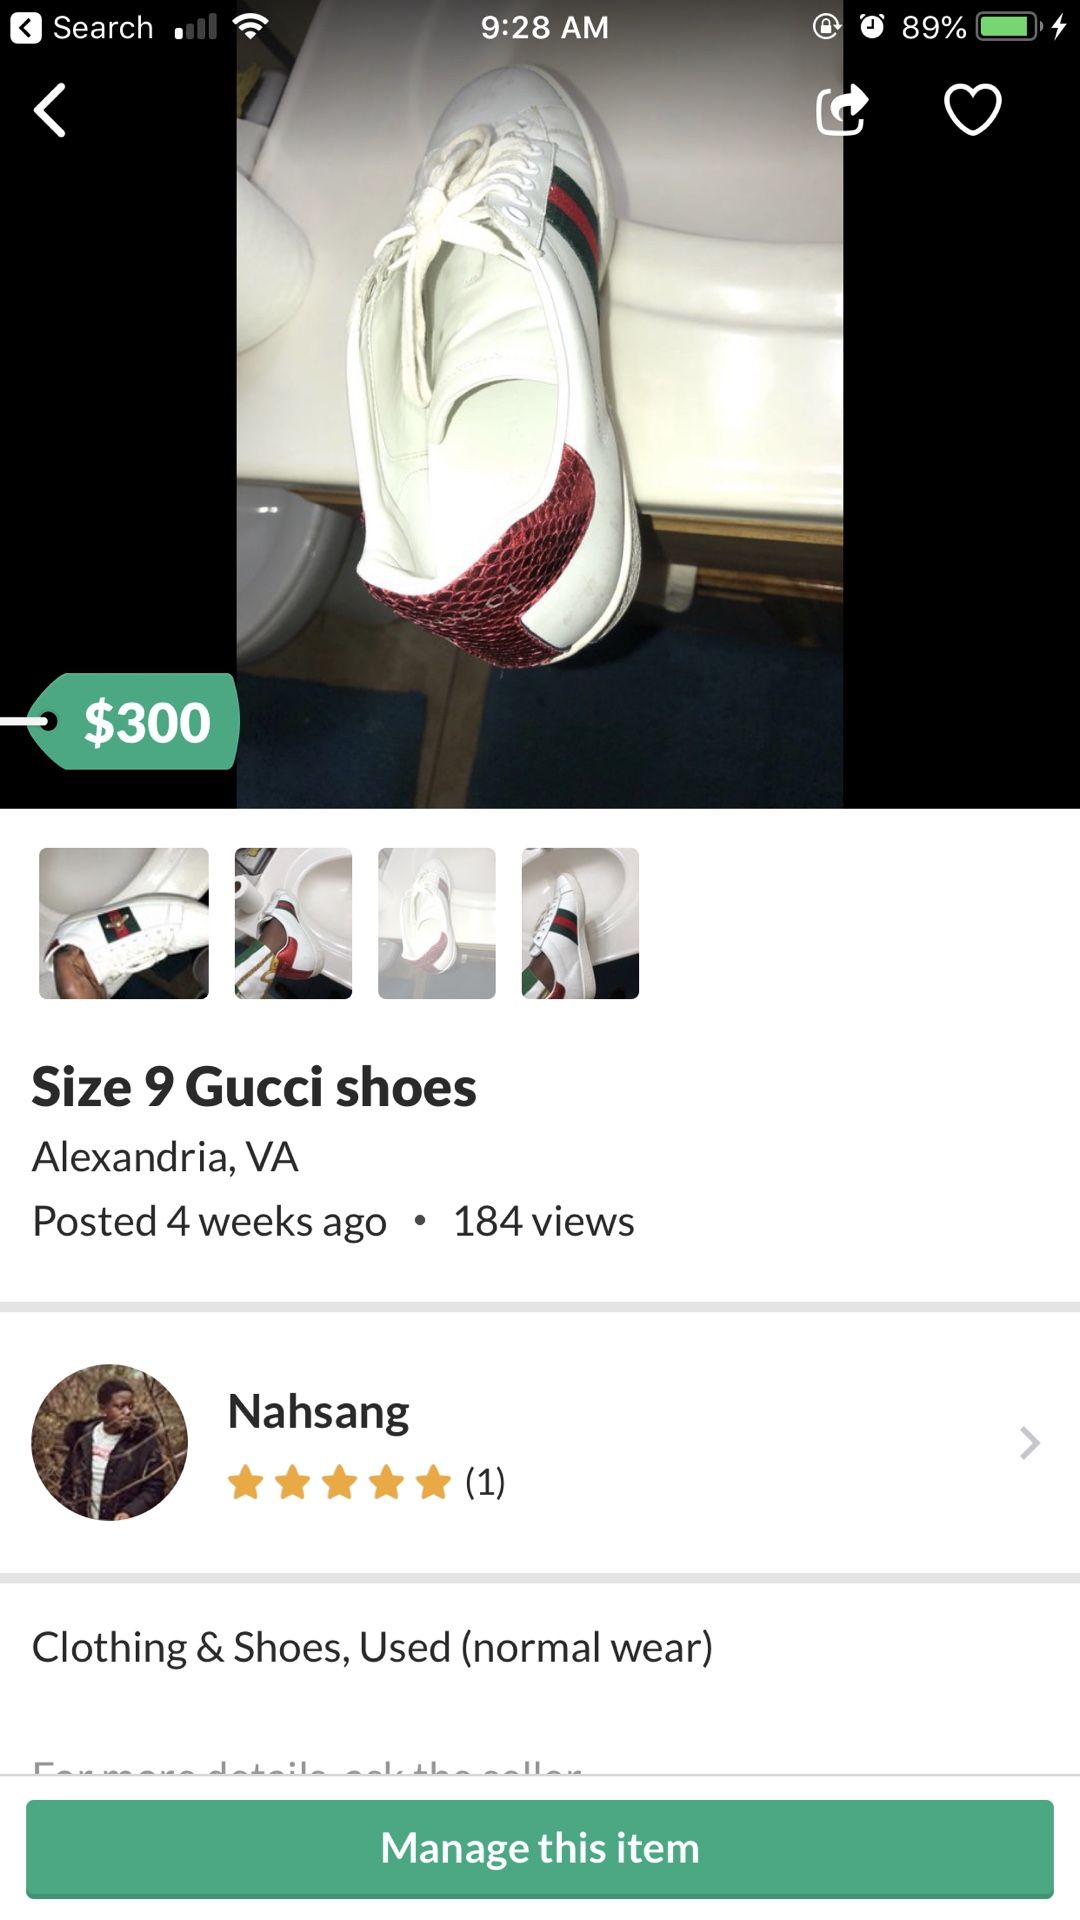 Size 9 Gucci shoes